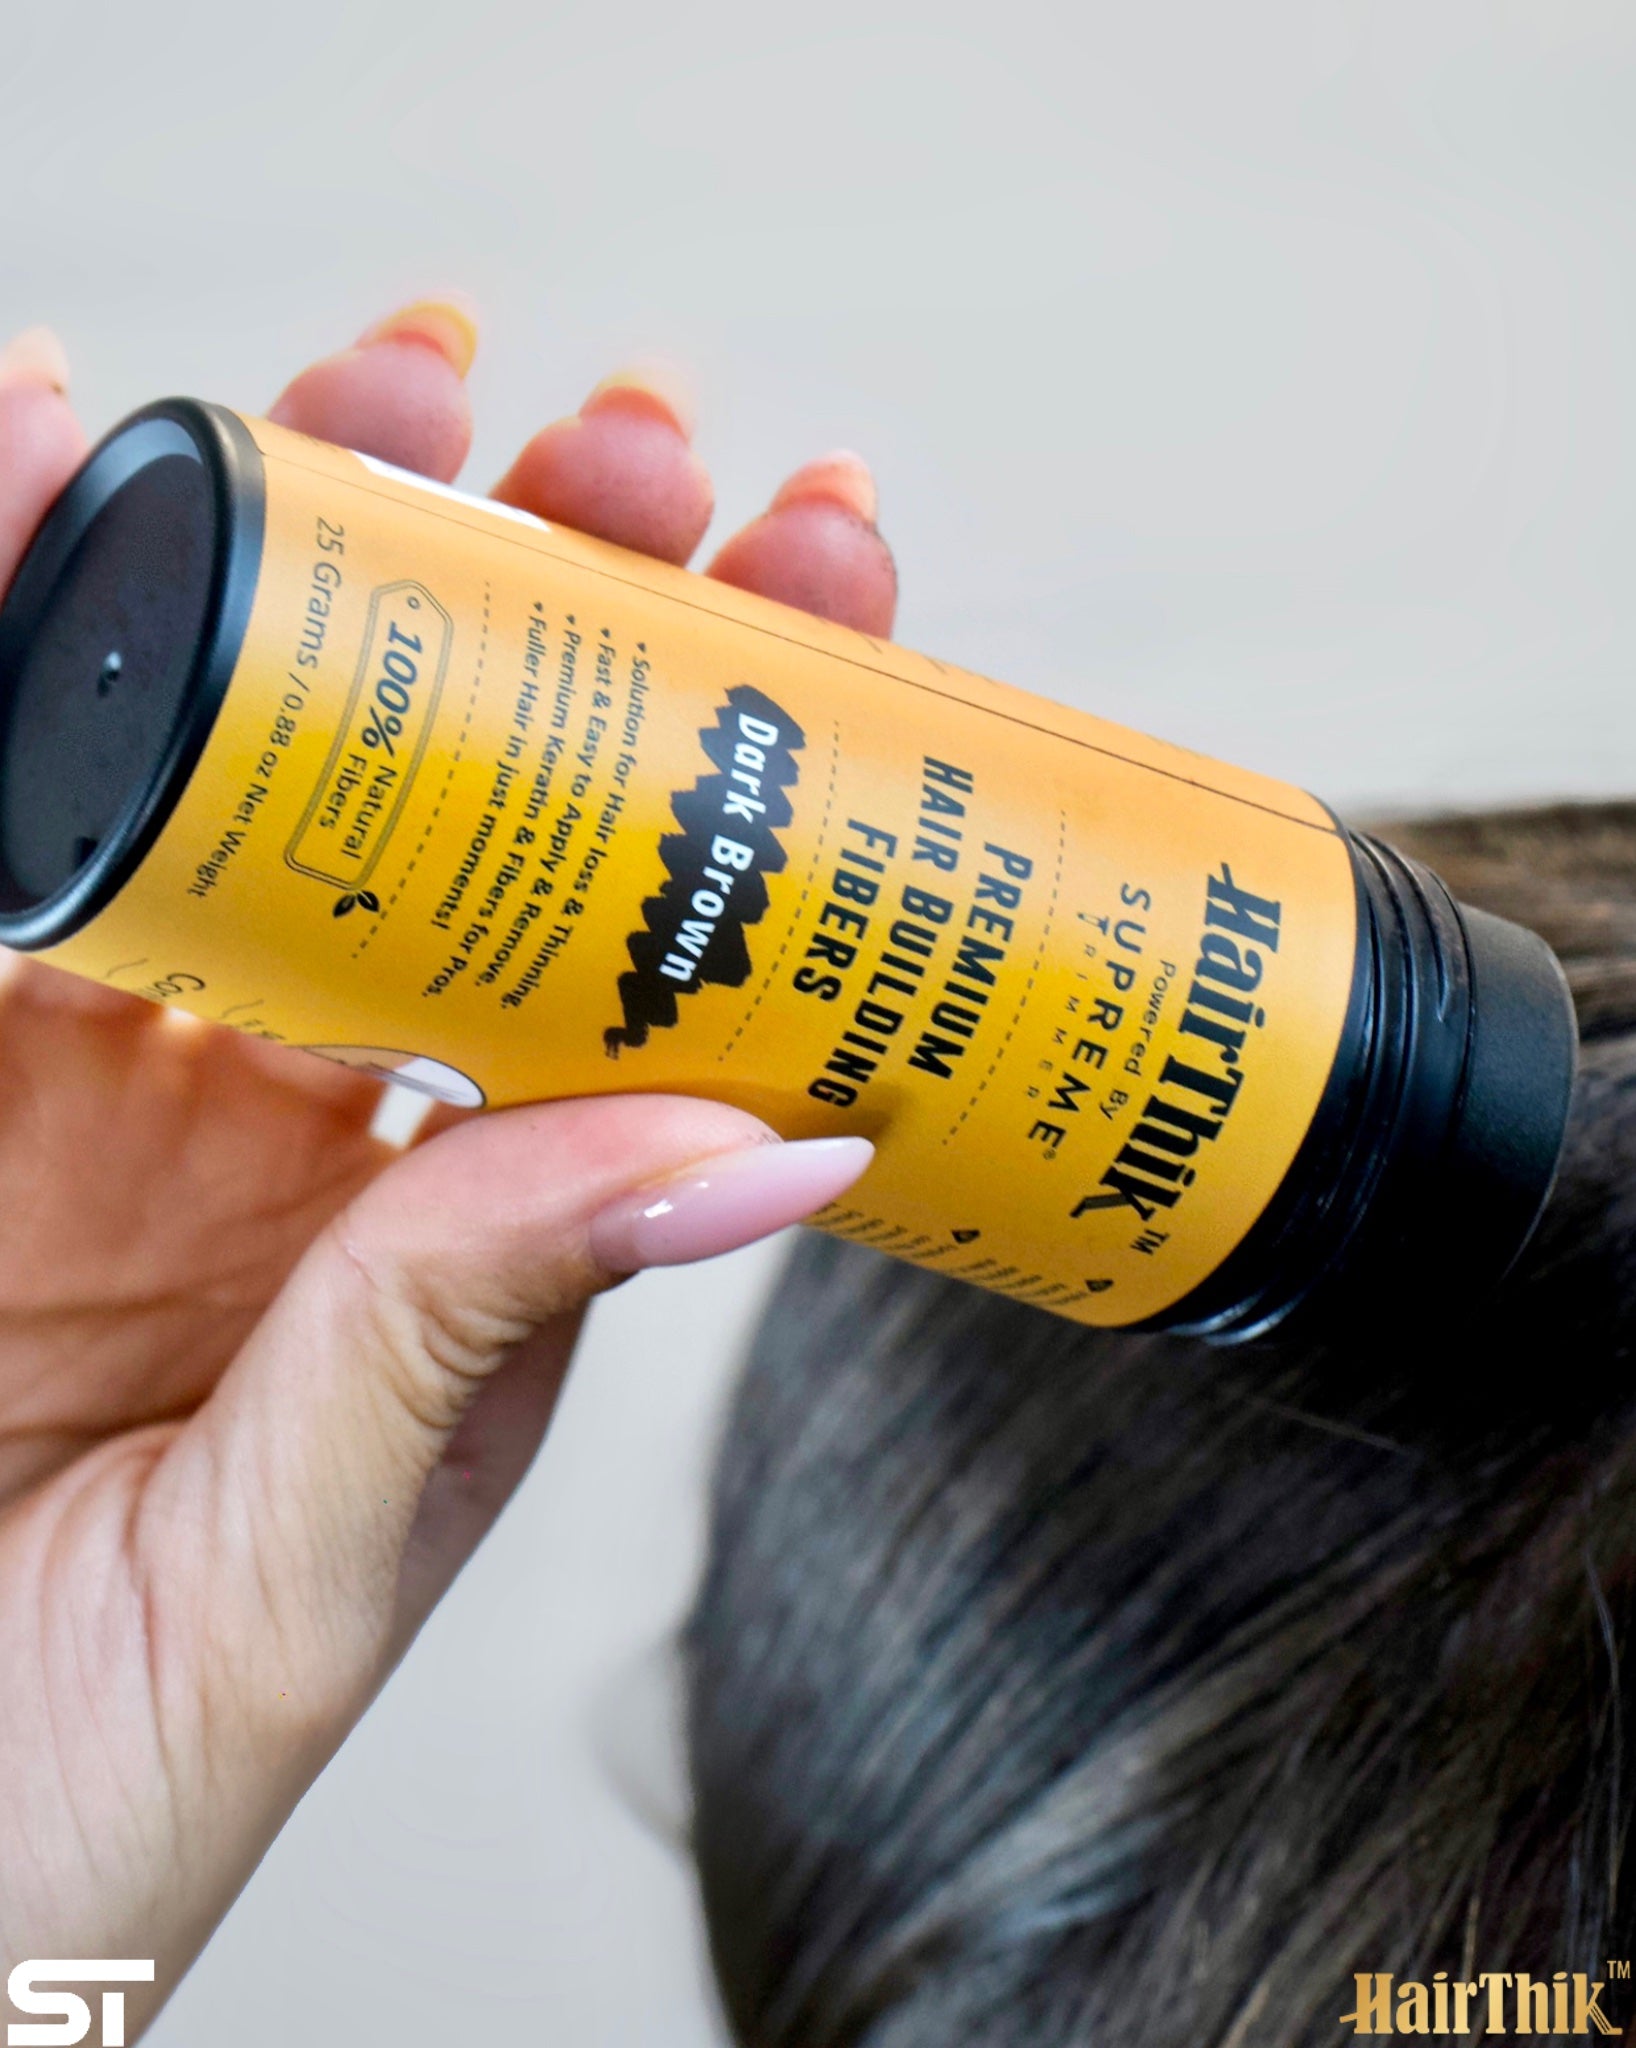 HairThik Hair Fibers - 15 grams